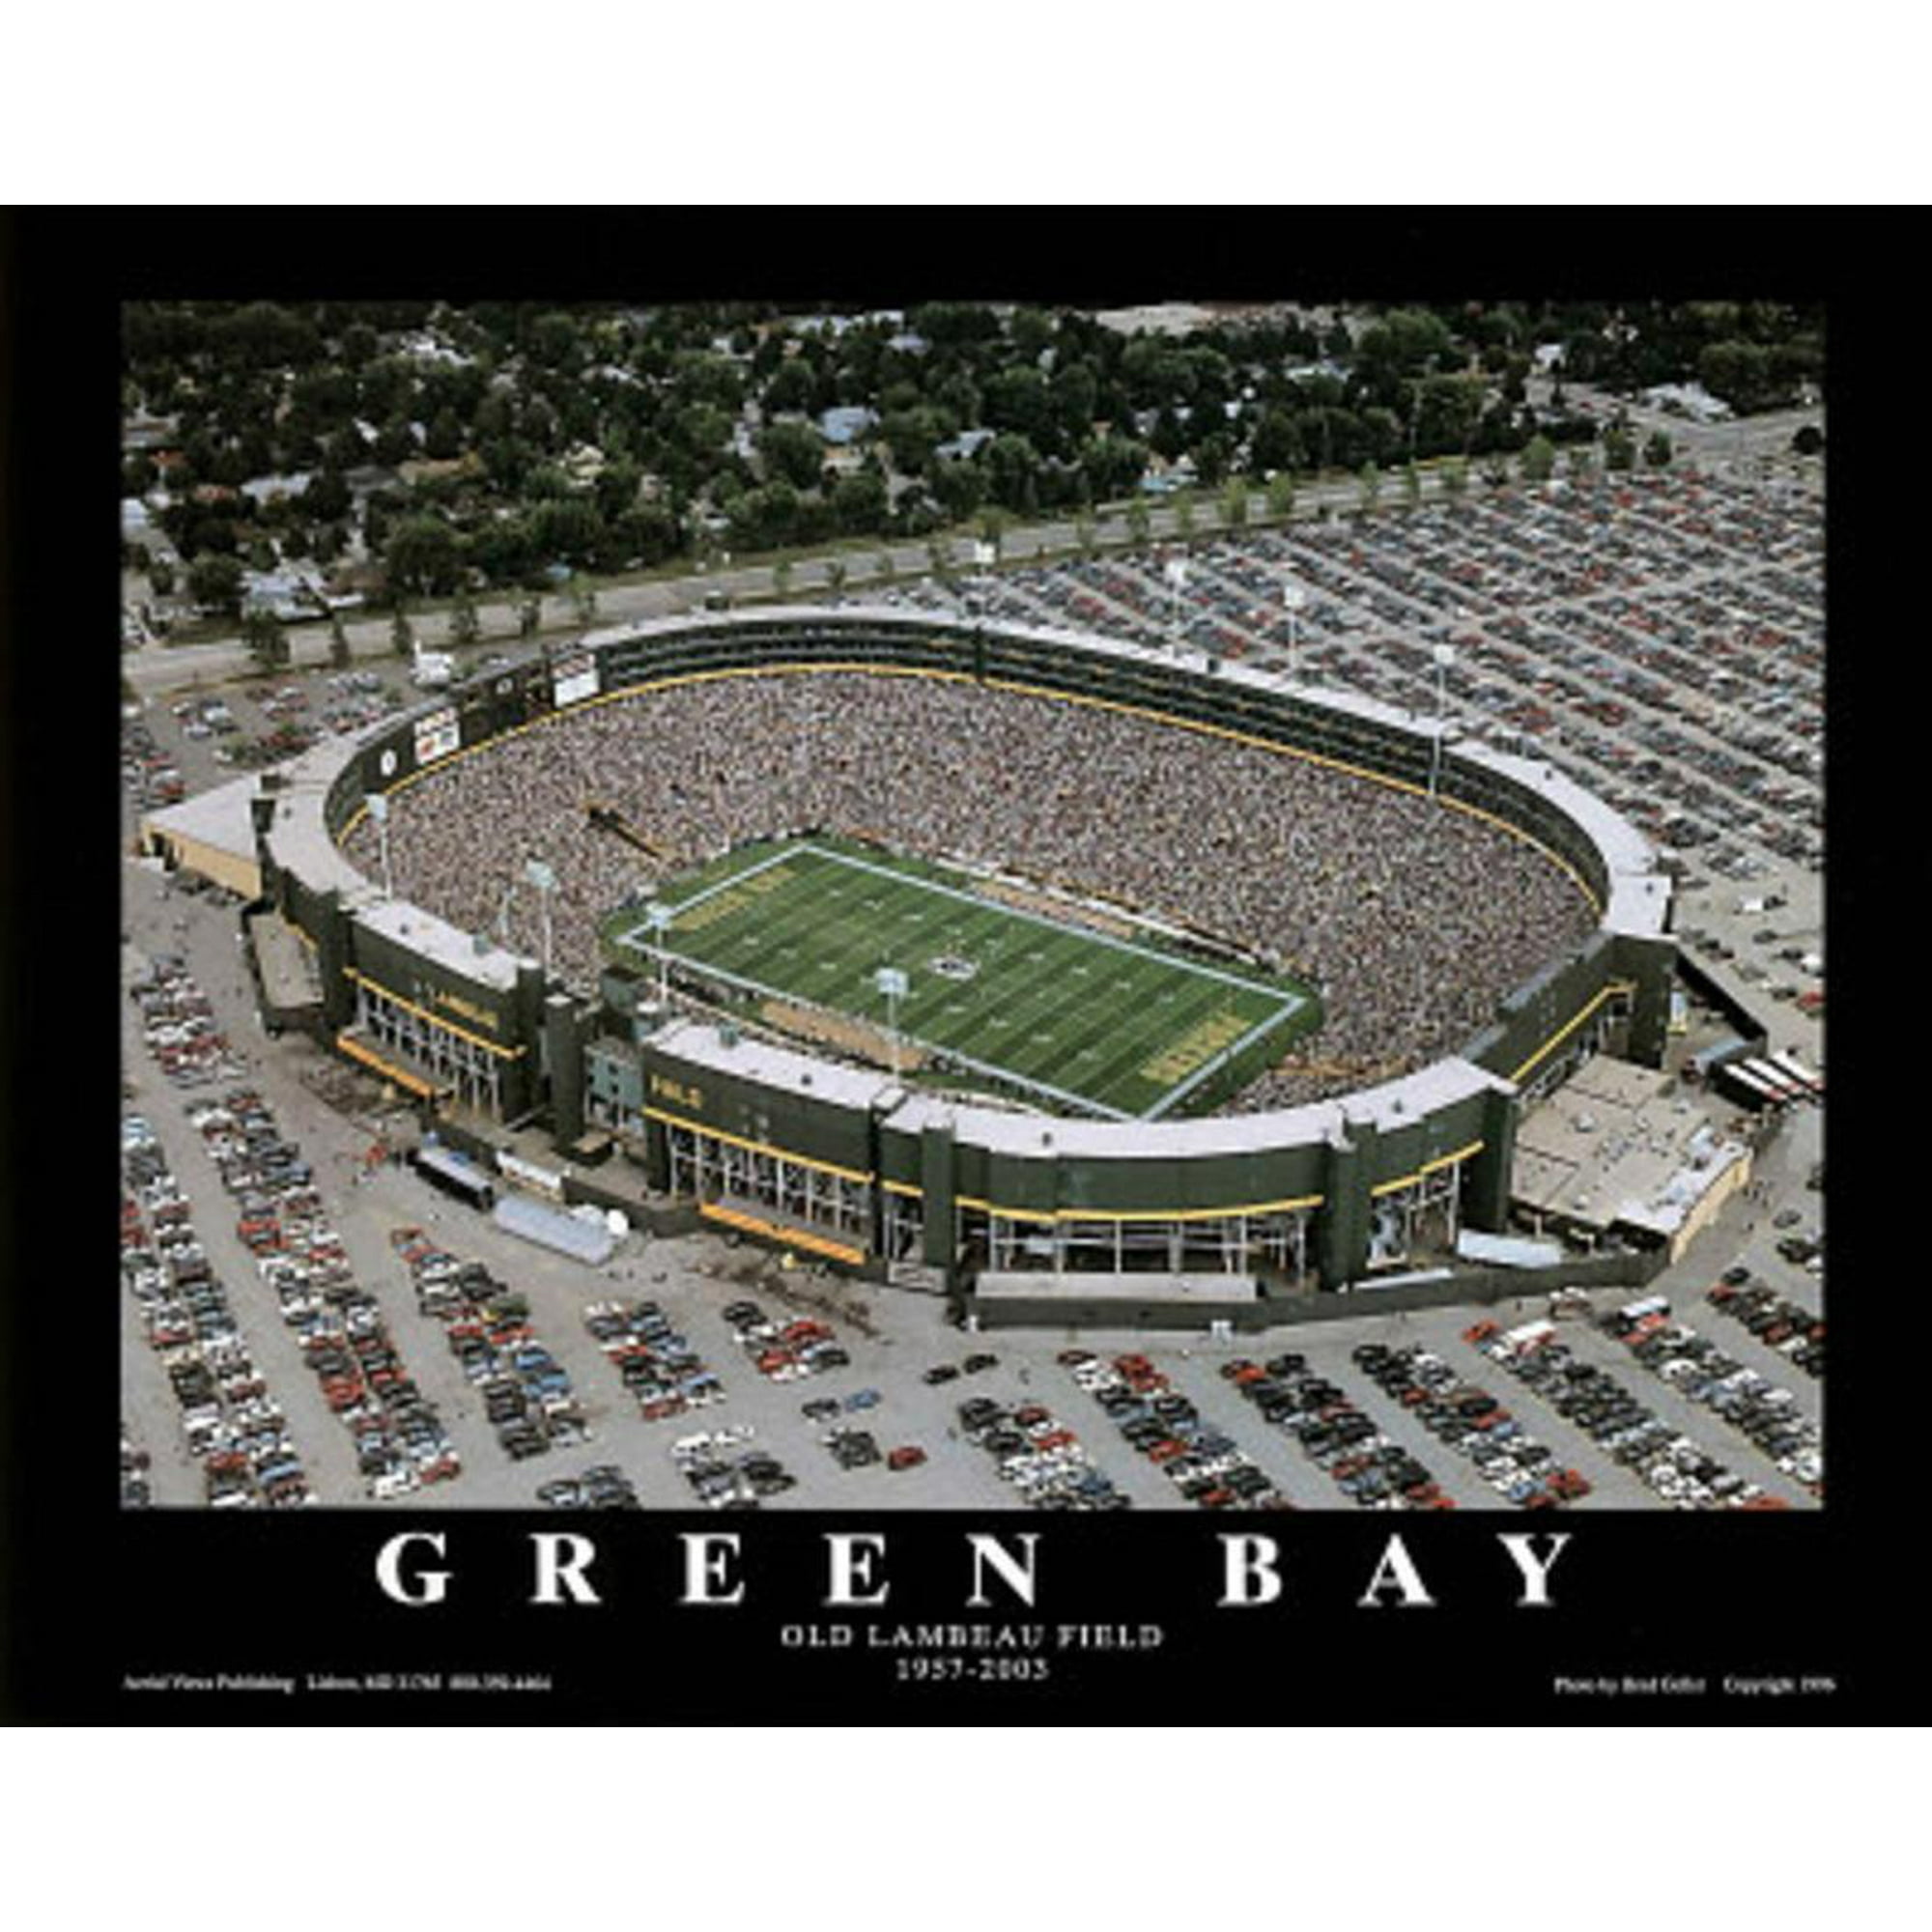 Green Bay Packers Old Lambeau Field, c.19572003 Sports Art Print 10x8 Sold  by Art.Com 